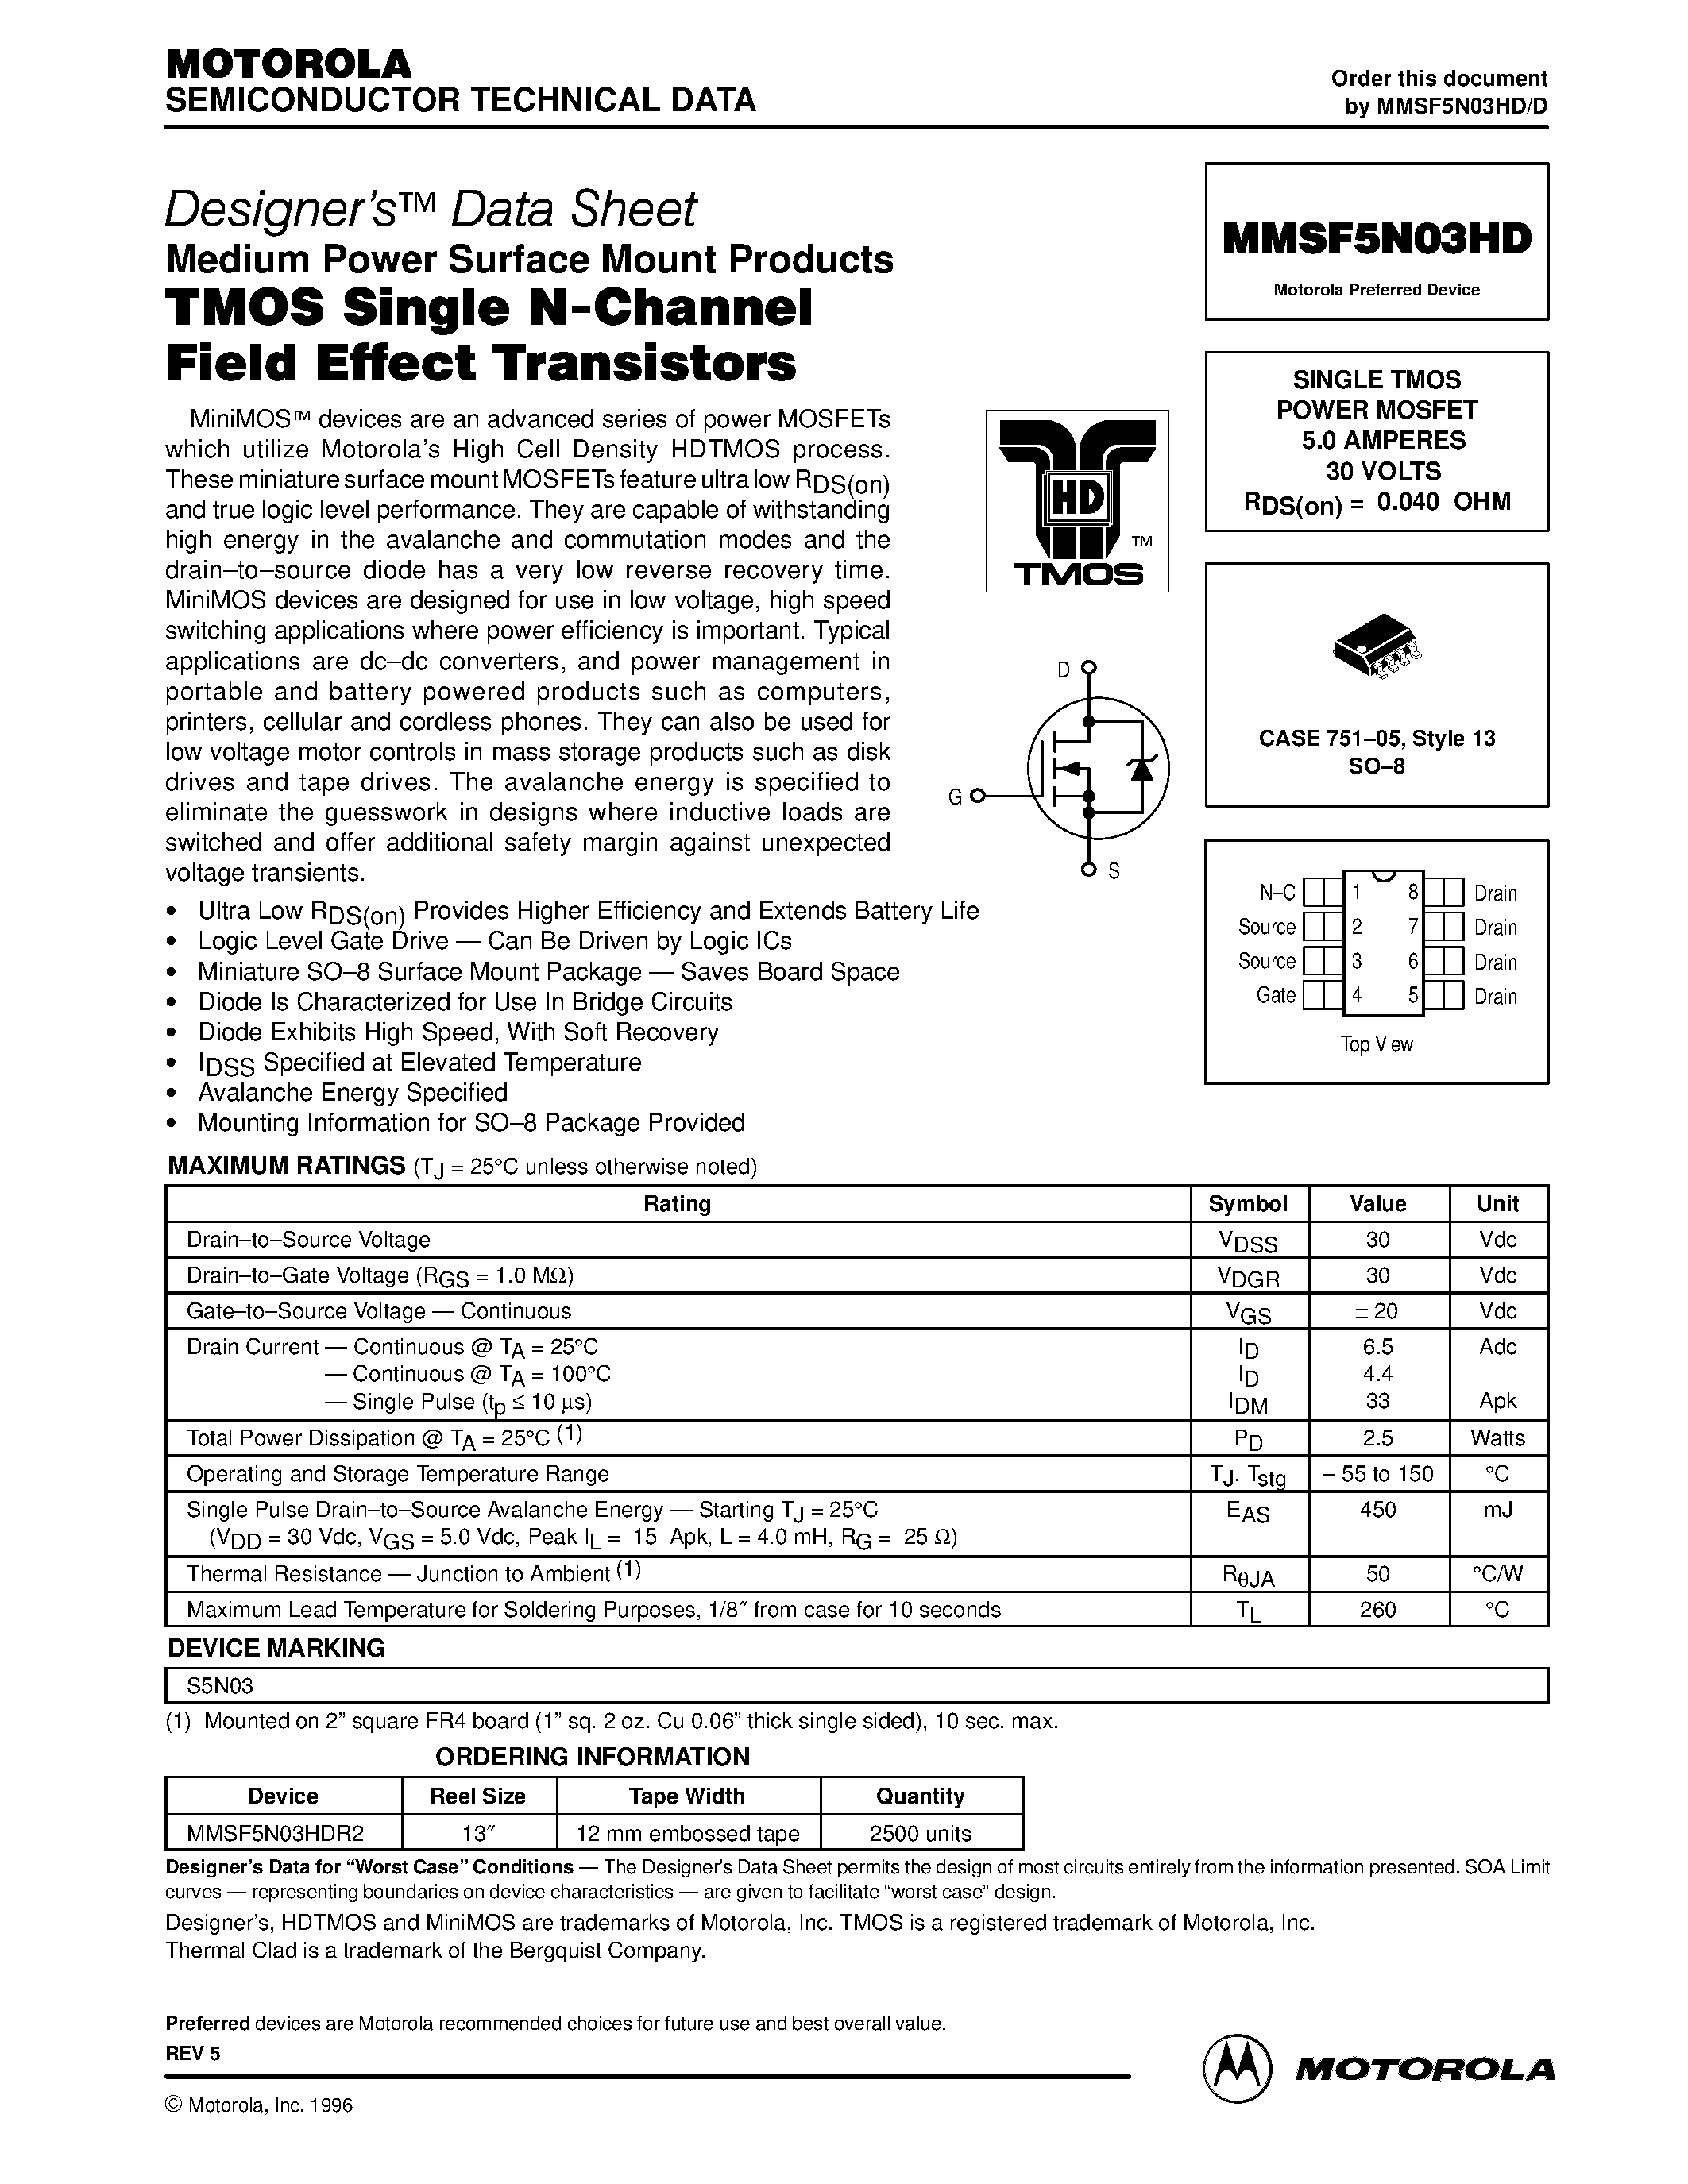 Datasheet MMSF5N03HD - SINGLE TMOS POWER MOSFET 5.0 AMPERES 30 VOLTS page 1